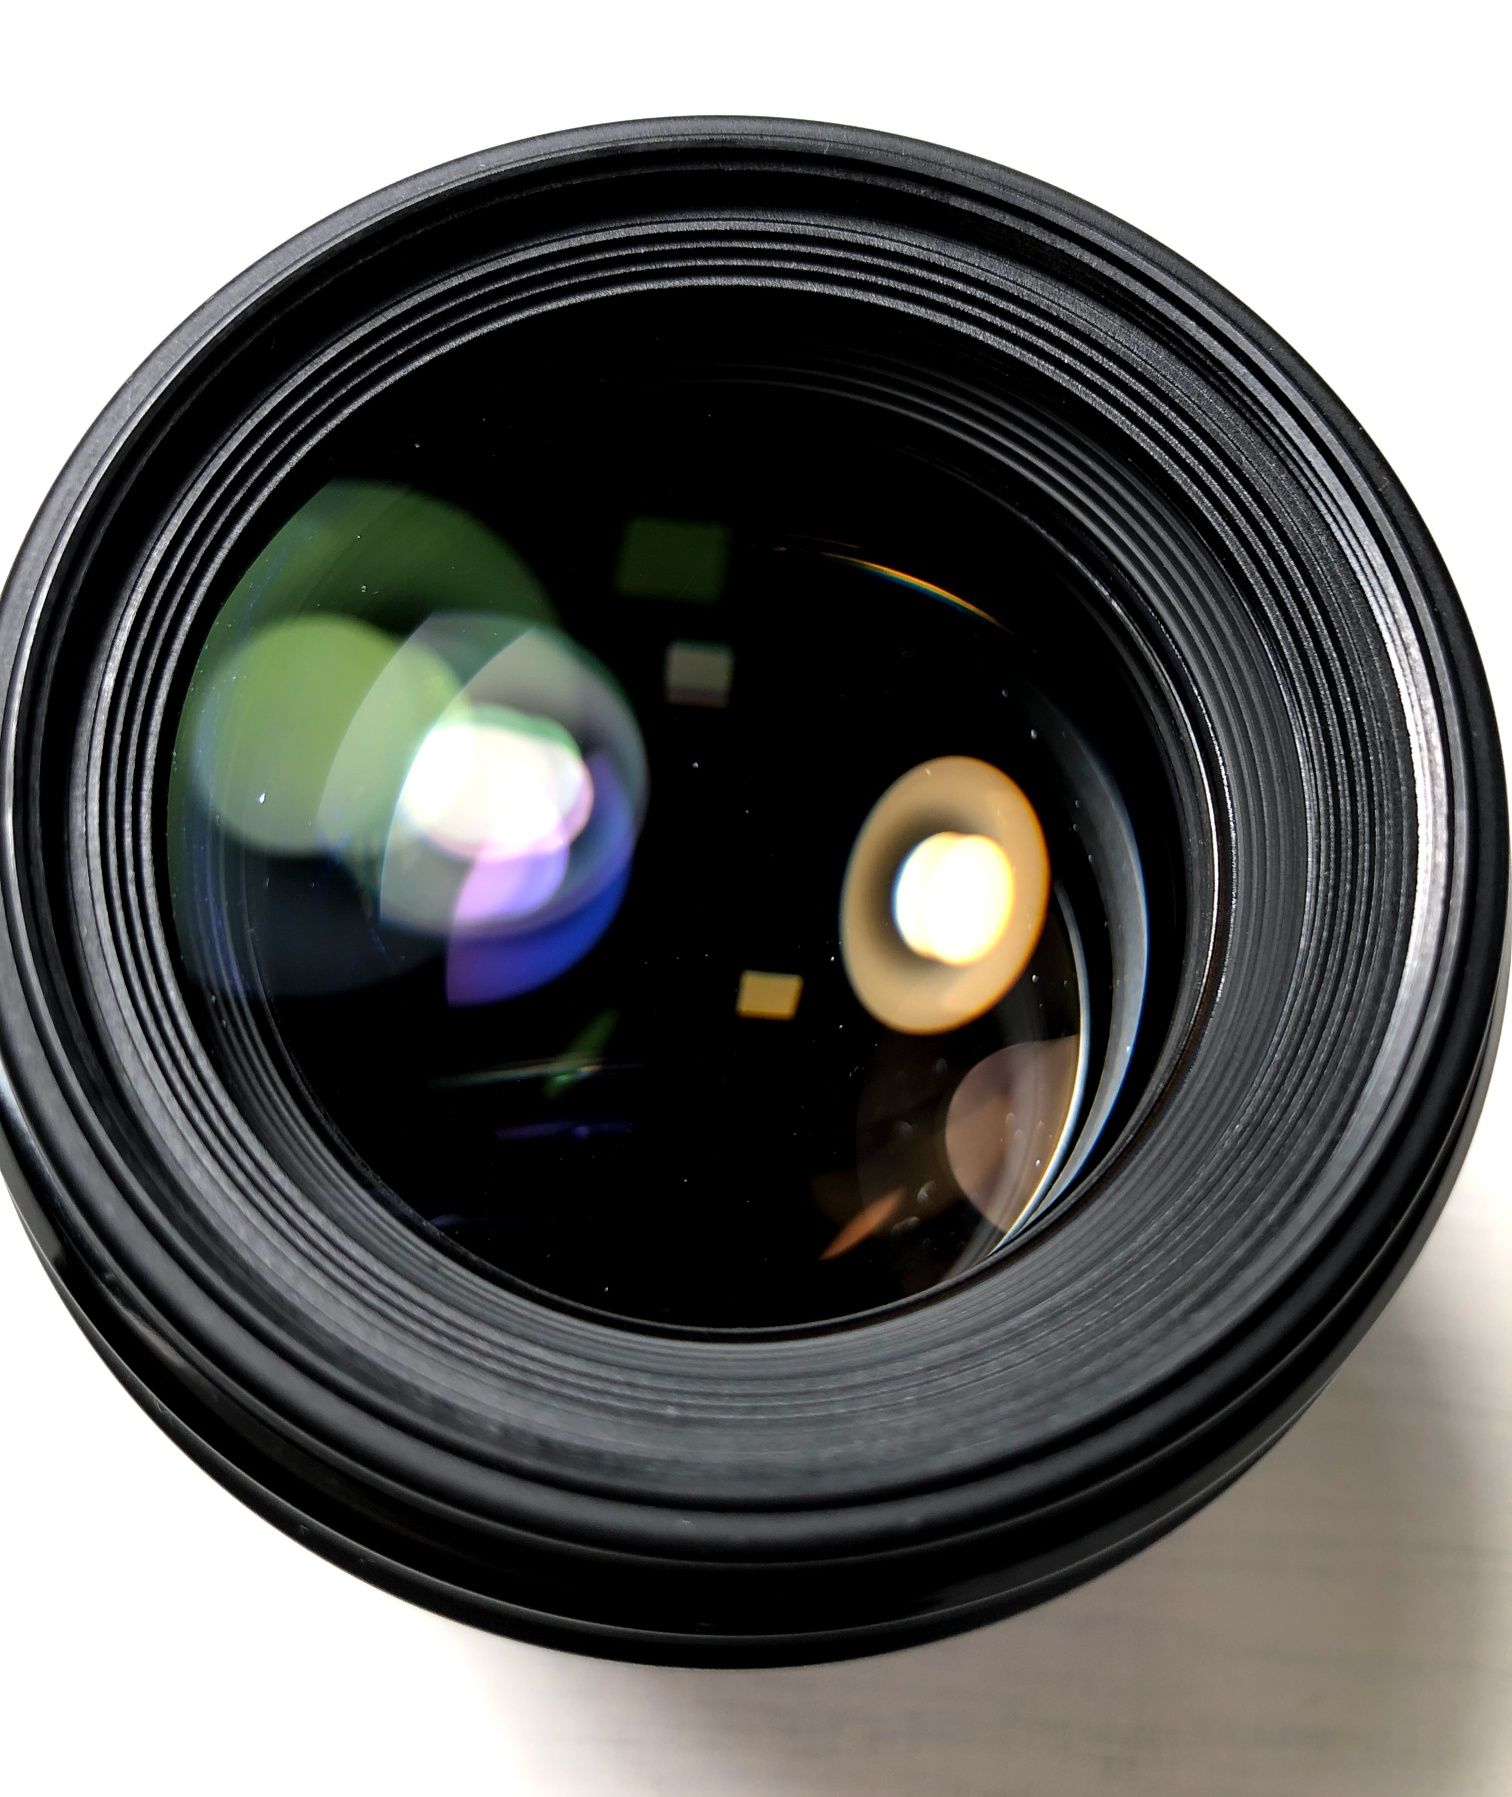 Canon 6D, объективы 24-105 и 85 мм